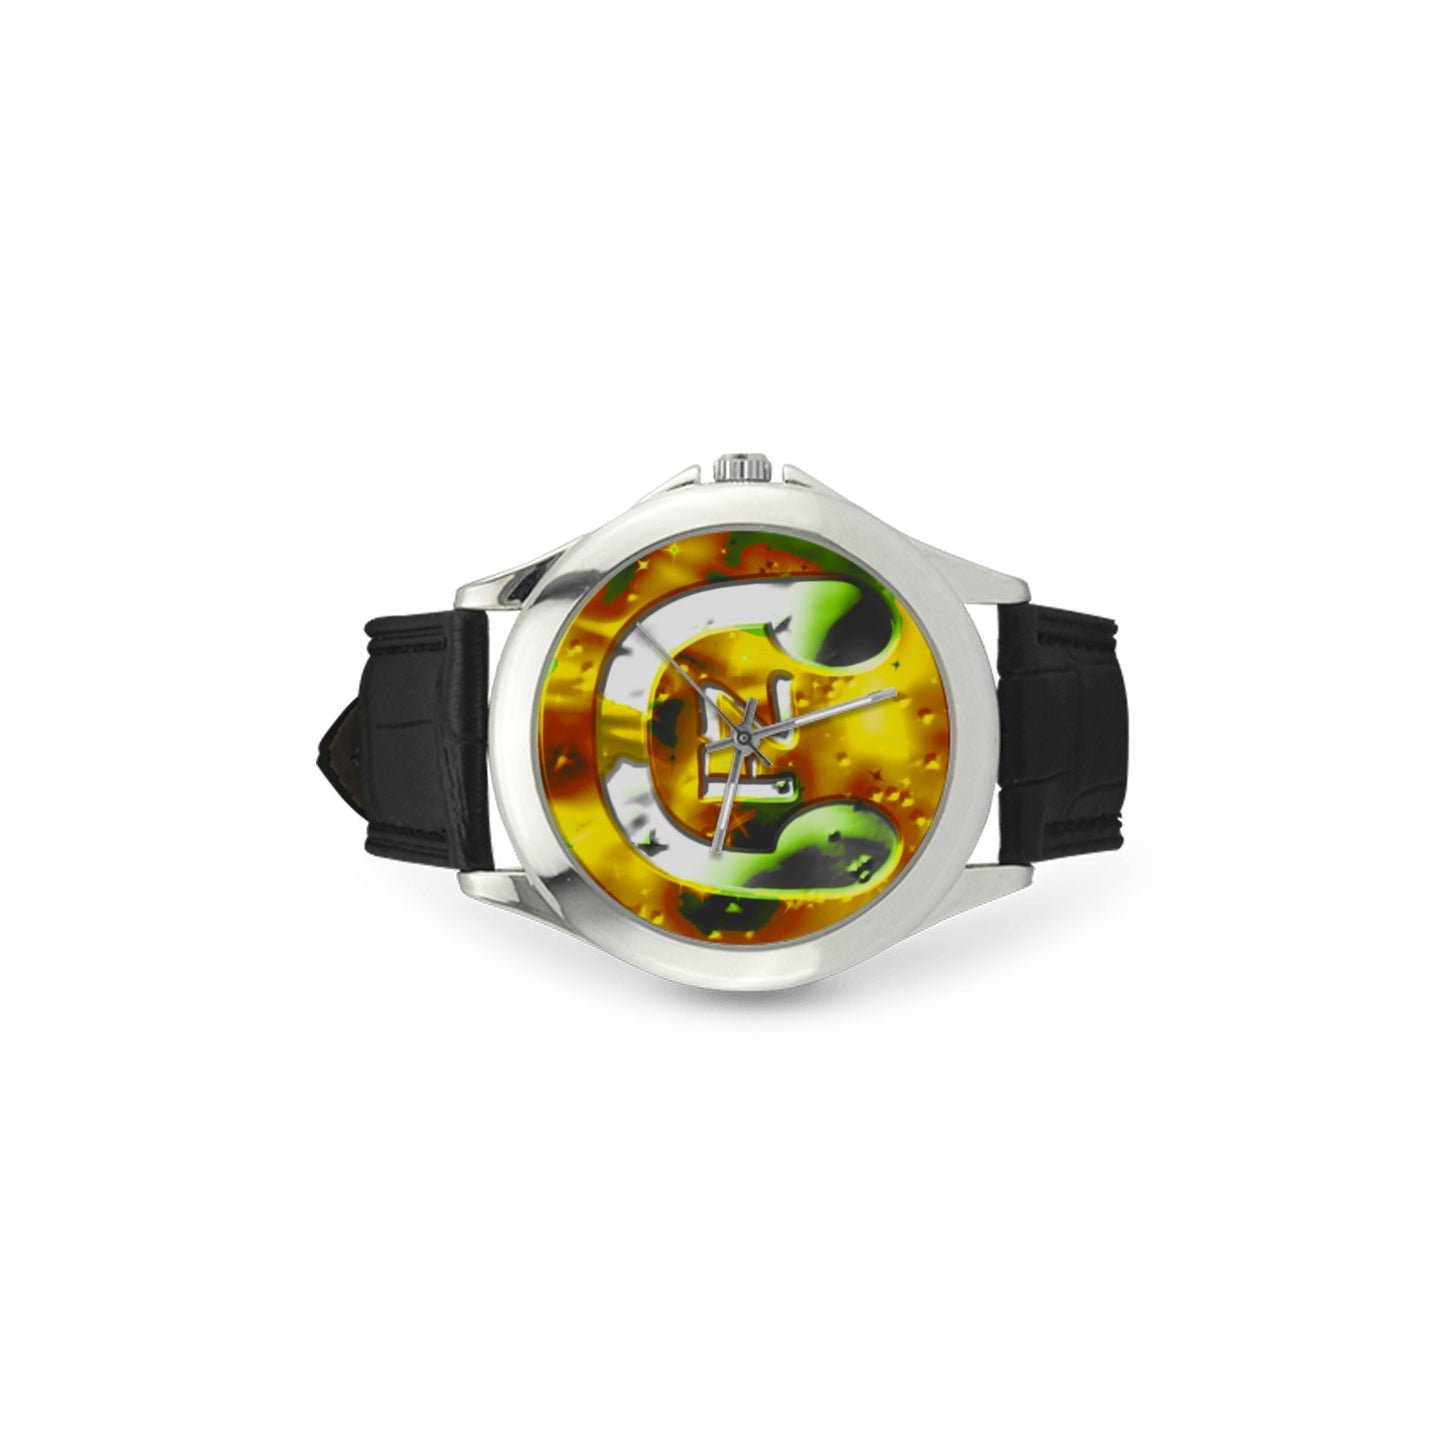 fz women's watch - yellow women's classic leather strap watch (model 203)